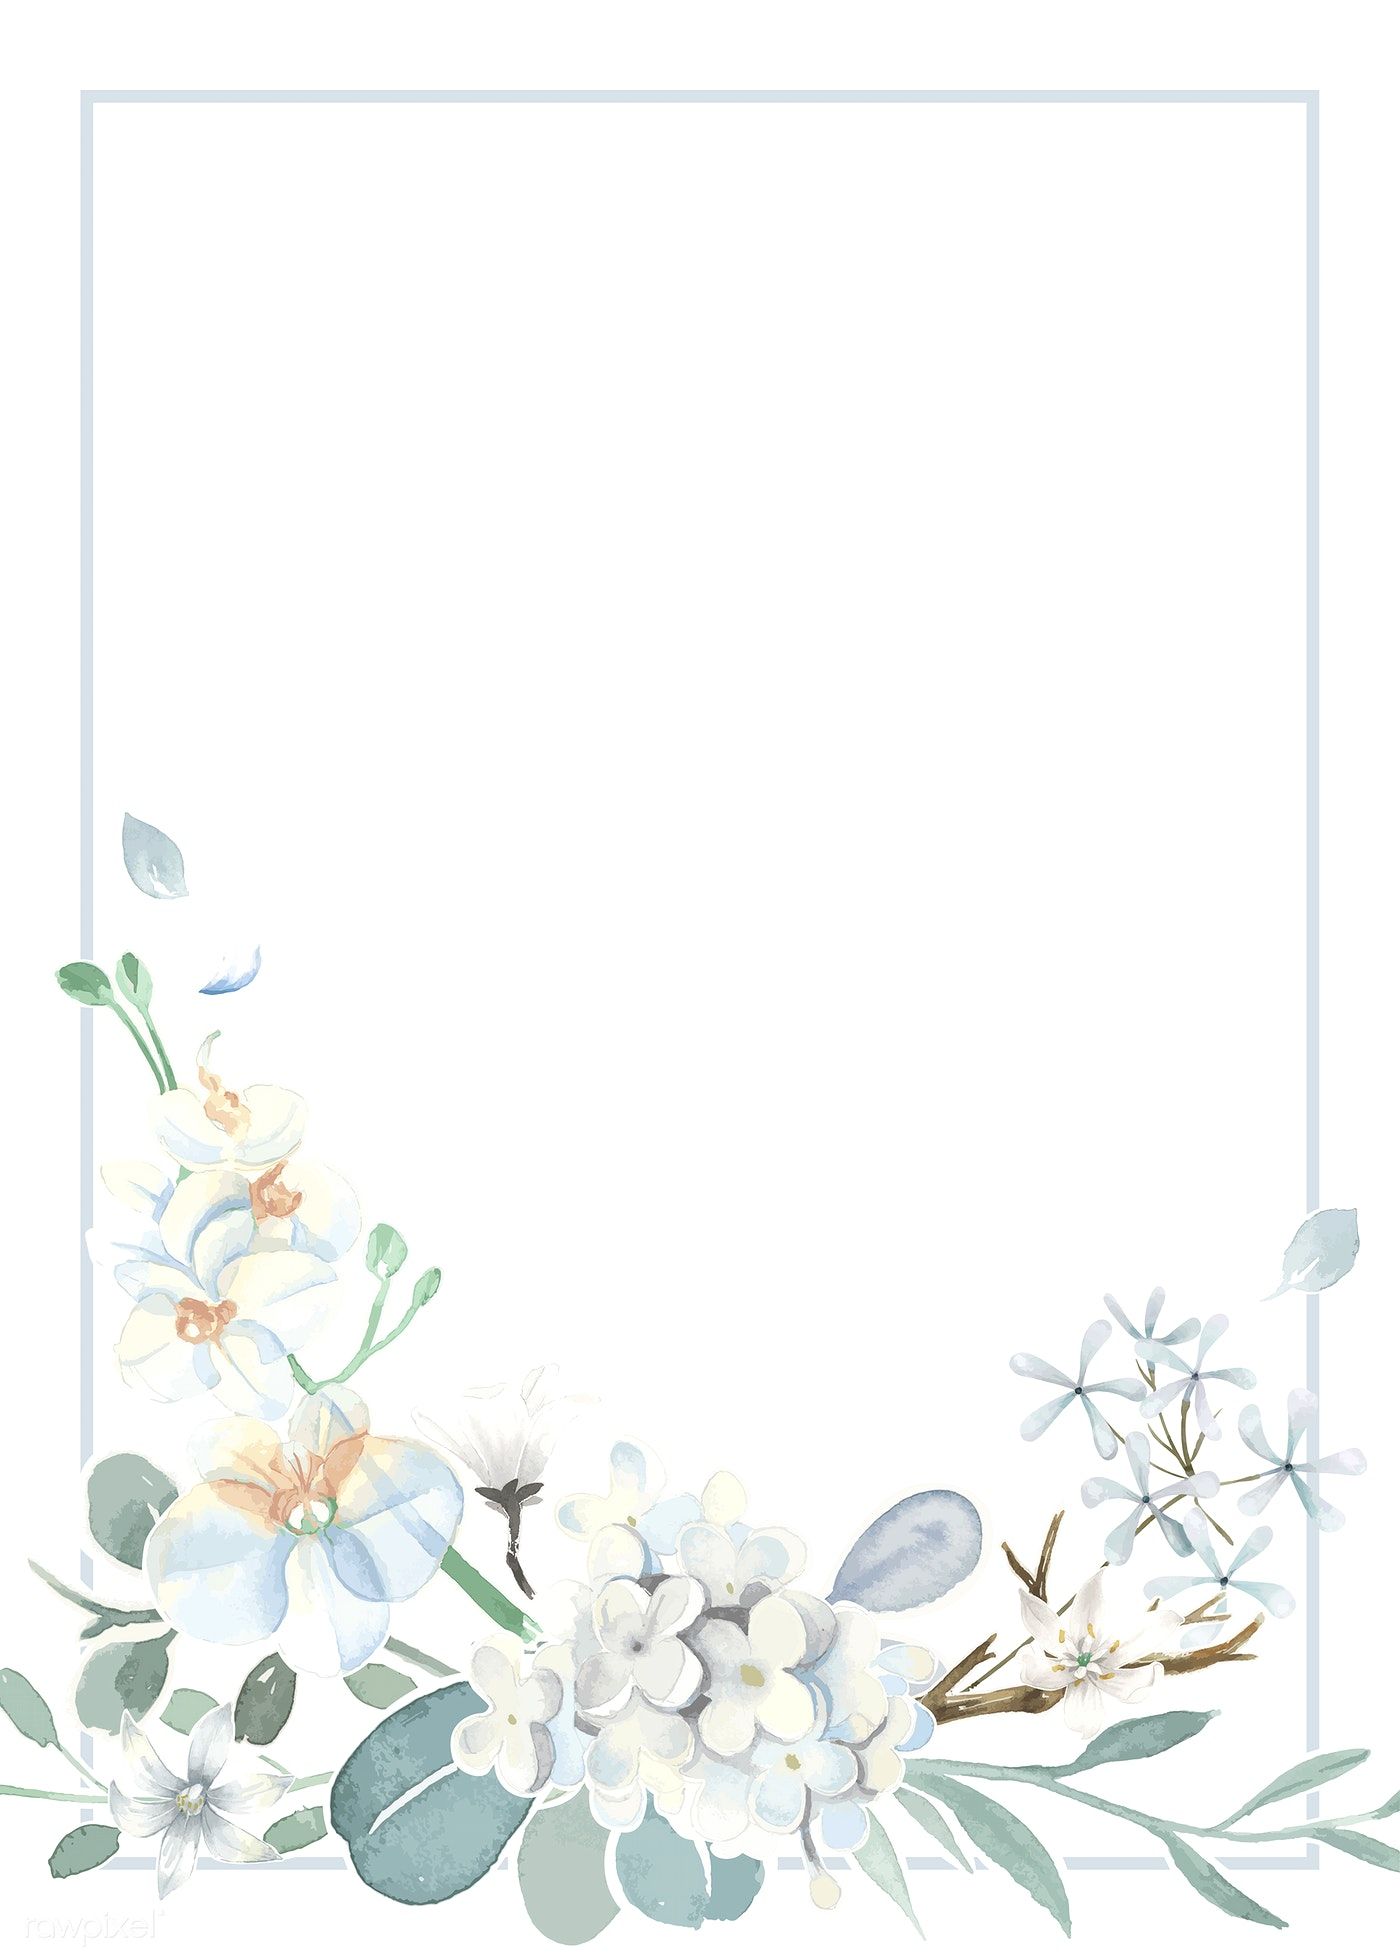 Greeting Card Background Design Wallpaper Teahub Io